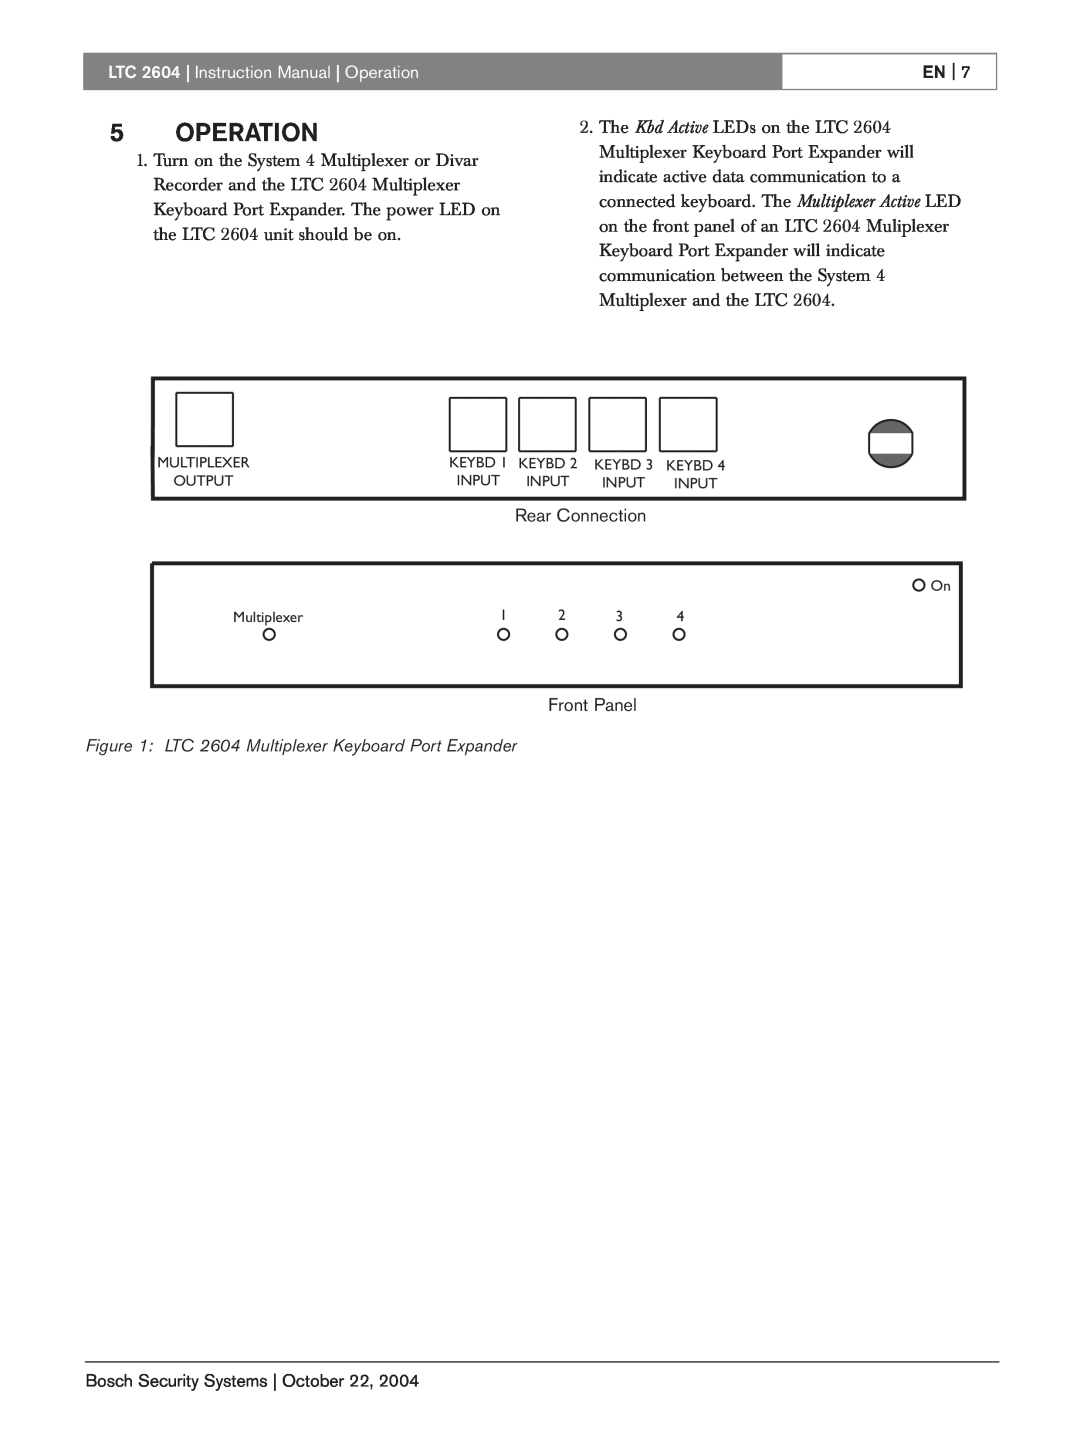 Bosch Appliances LTC 2604 instruction manual 5OPERATION, En 